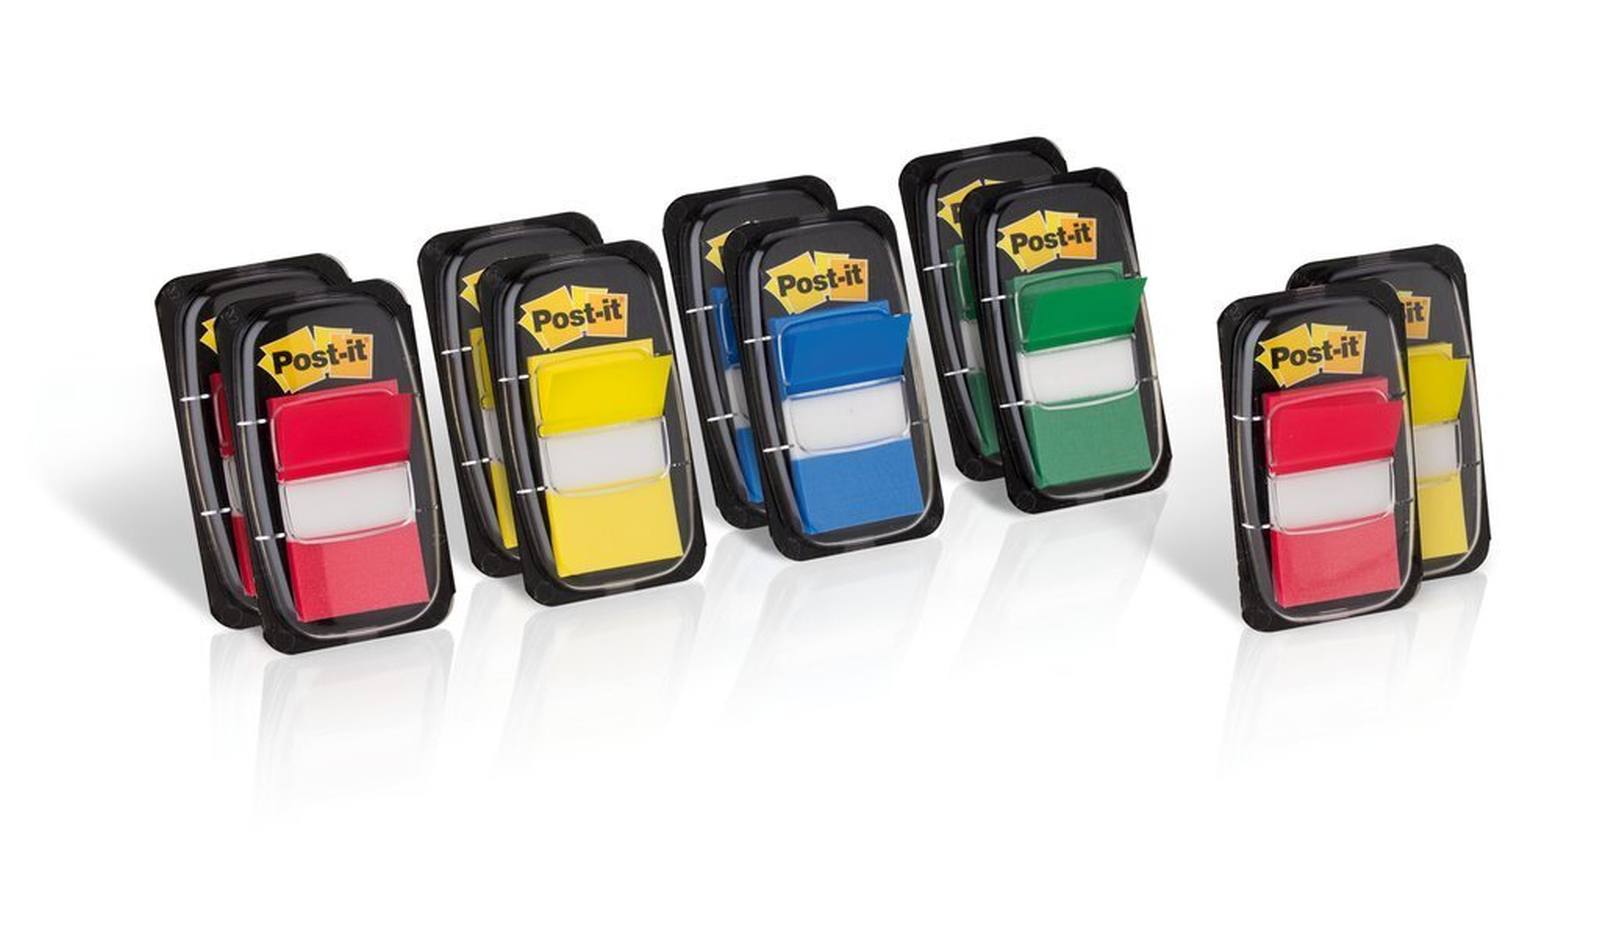 3M Post-it Indice 680P10+2, 25,4 mm x 43,2 mm, blu, giallo, verde, rosso, 10 x 50 strisce adesive in dispenser